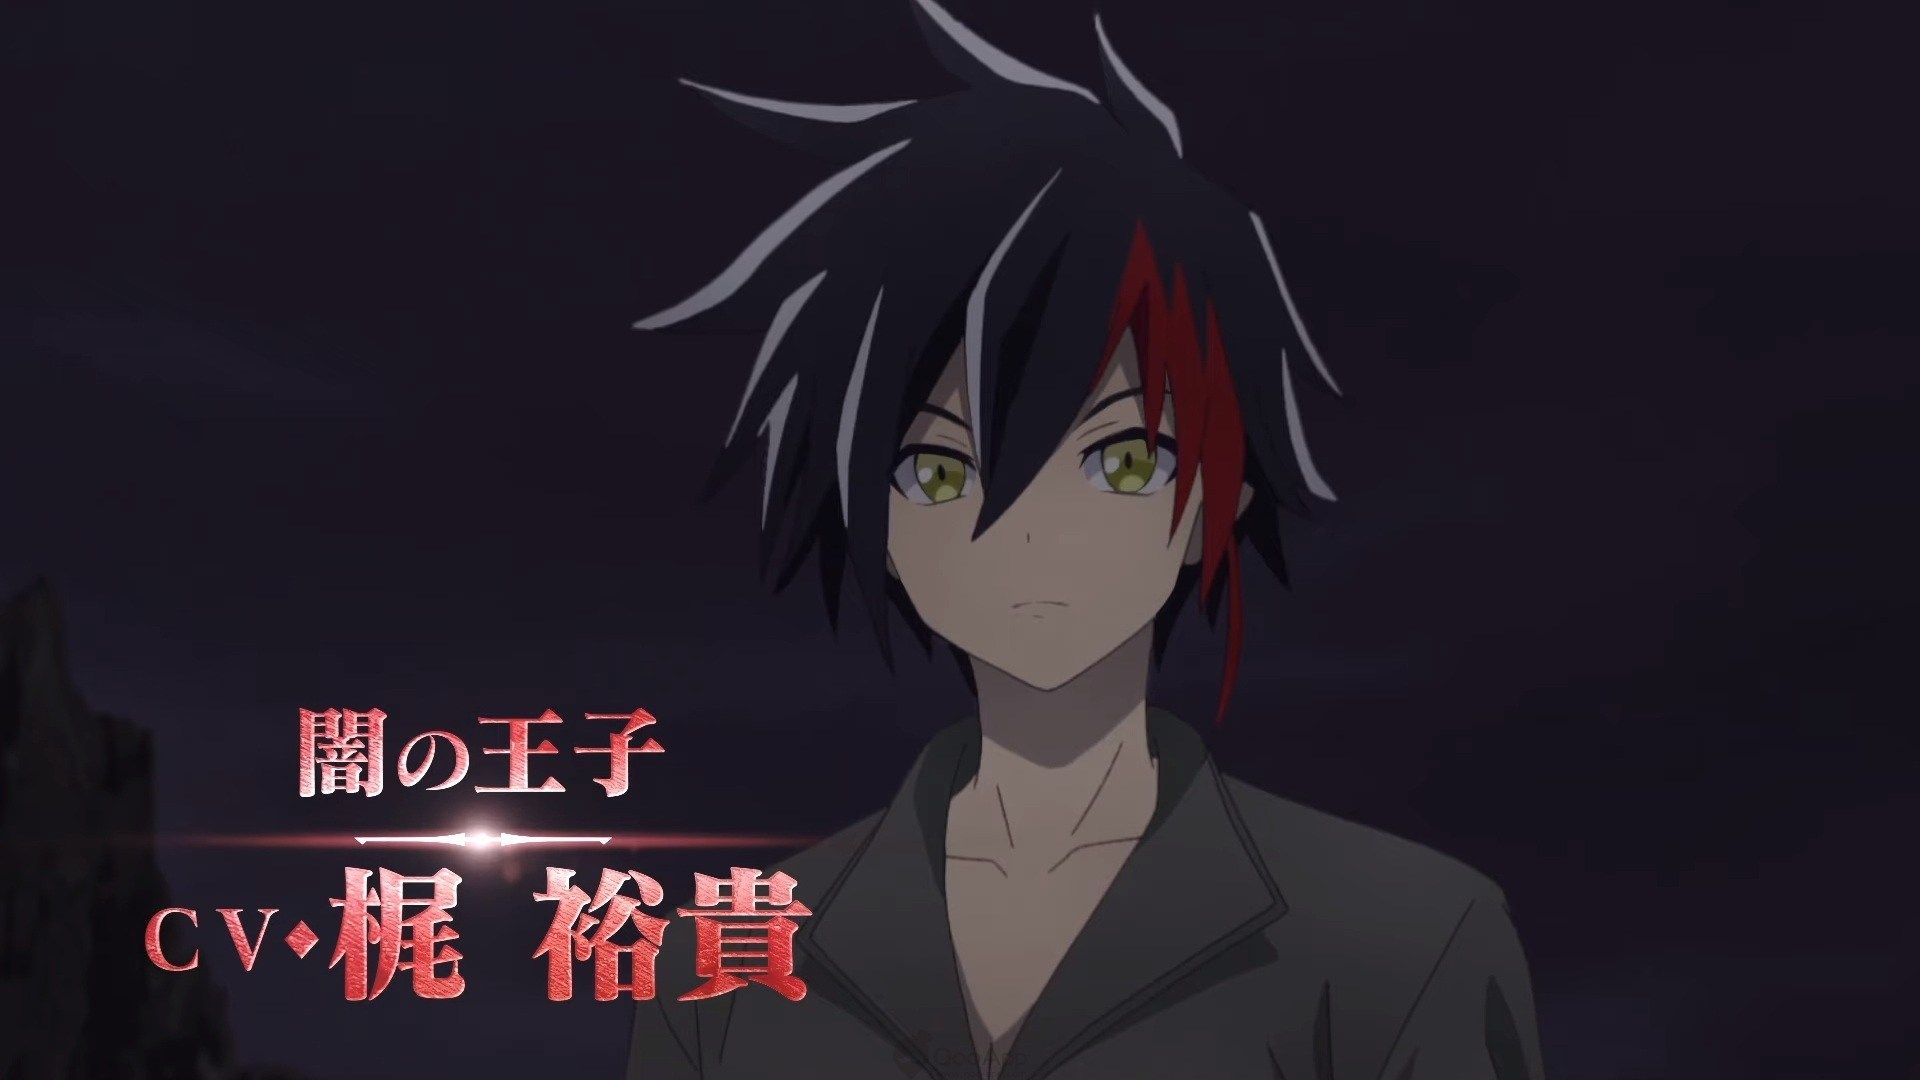 Anime Boy - Prince of Darkness Anime Name: Zero Chronicle